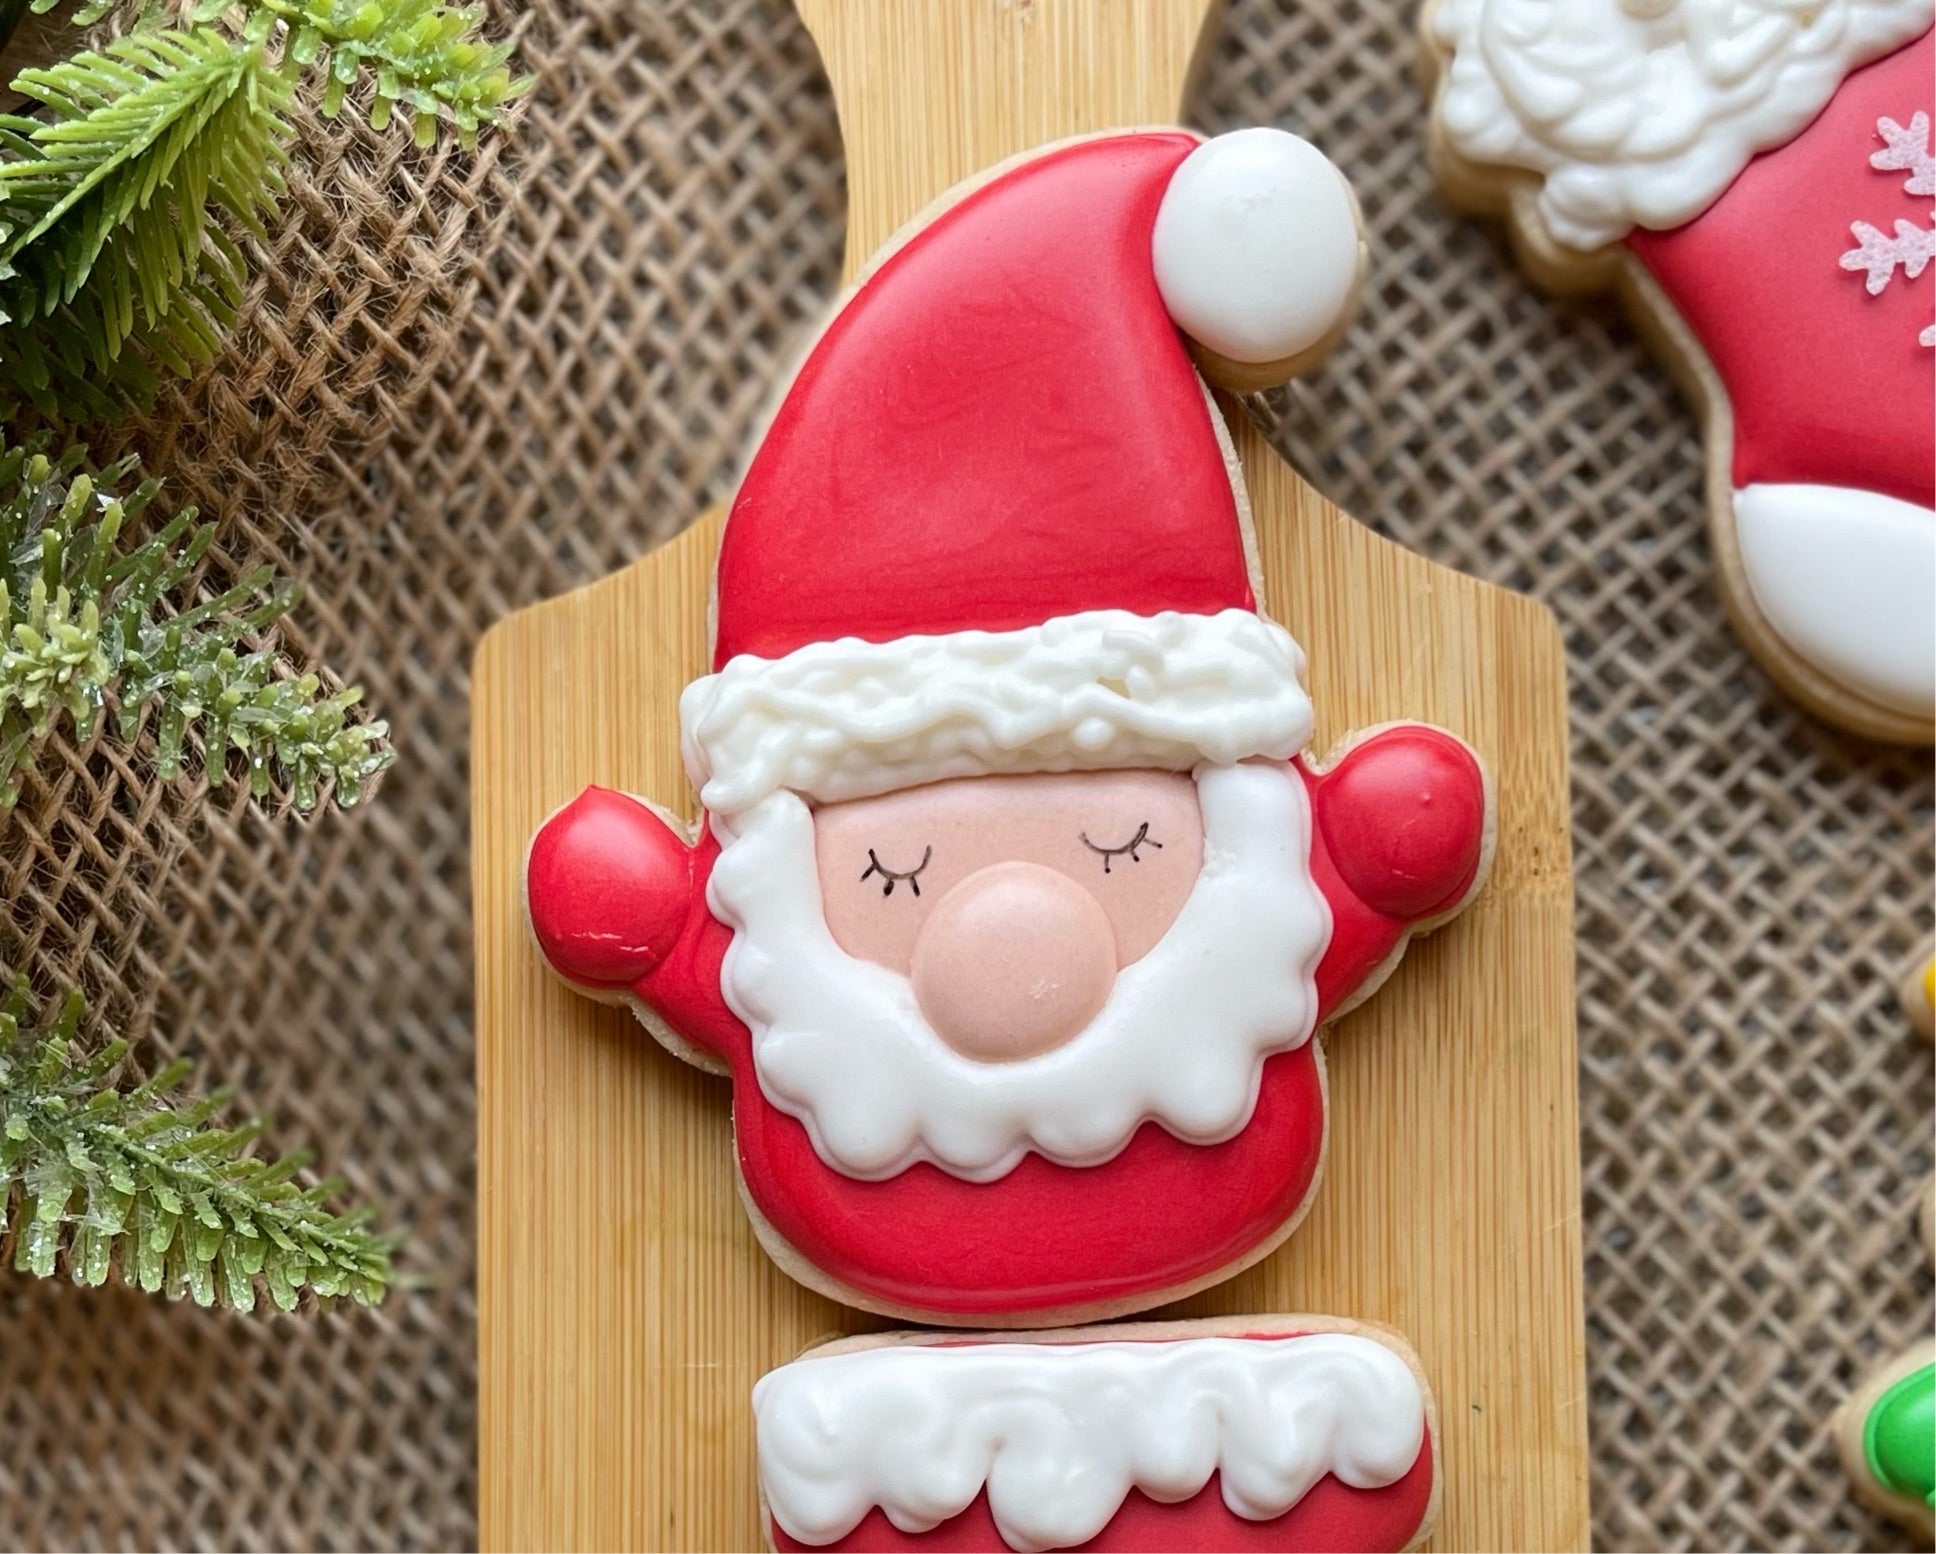 Chubby Santa Cookie cutter